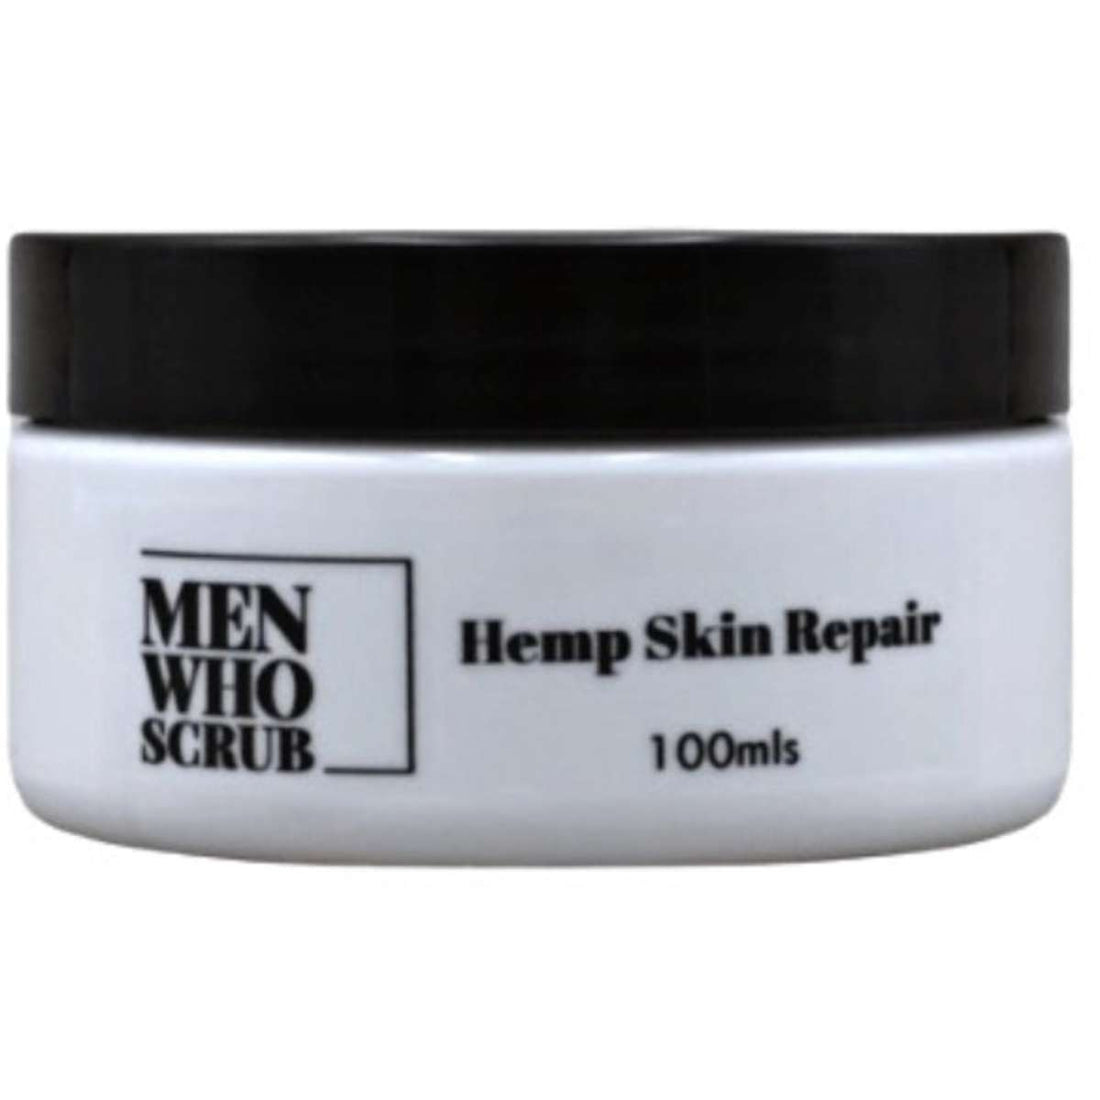 Men Who Scrub Hemp Skin Repair Moisturiser 100ml